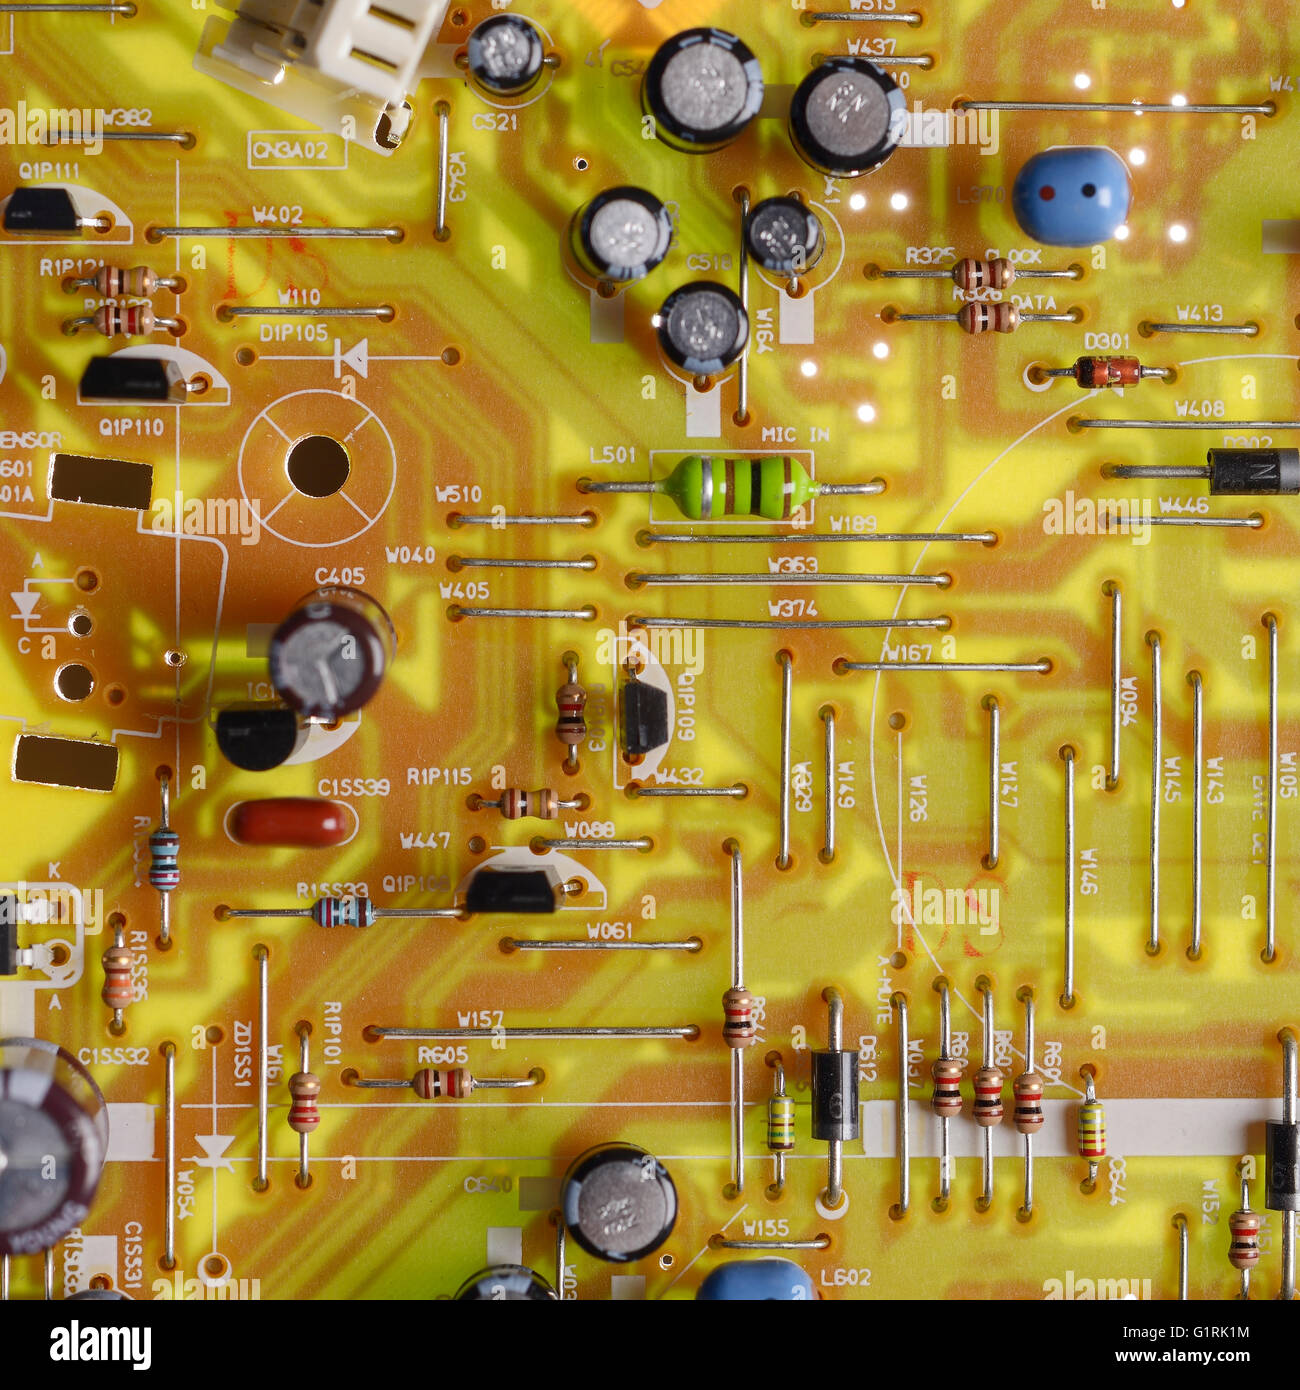 Printed circuit board abstract close up detail Stock Photo